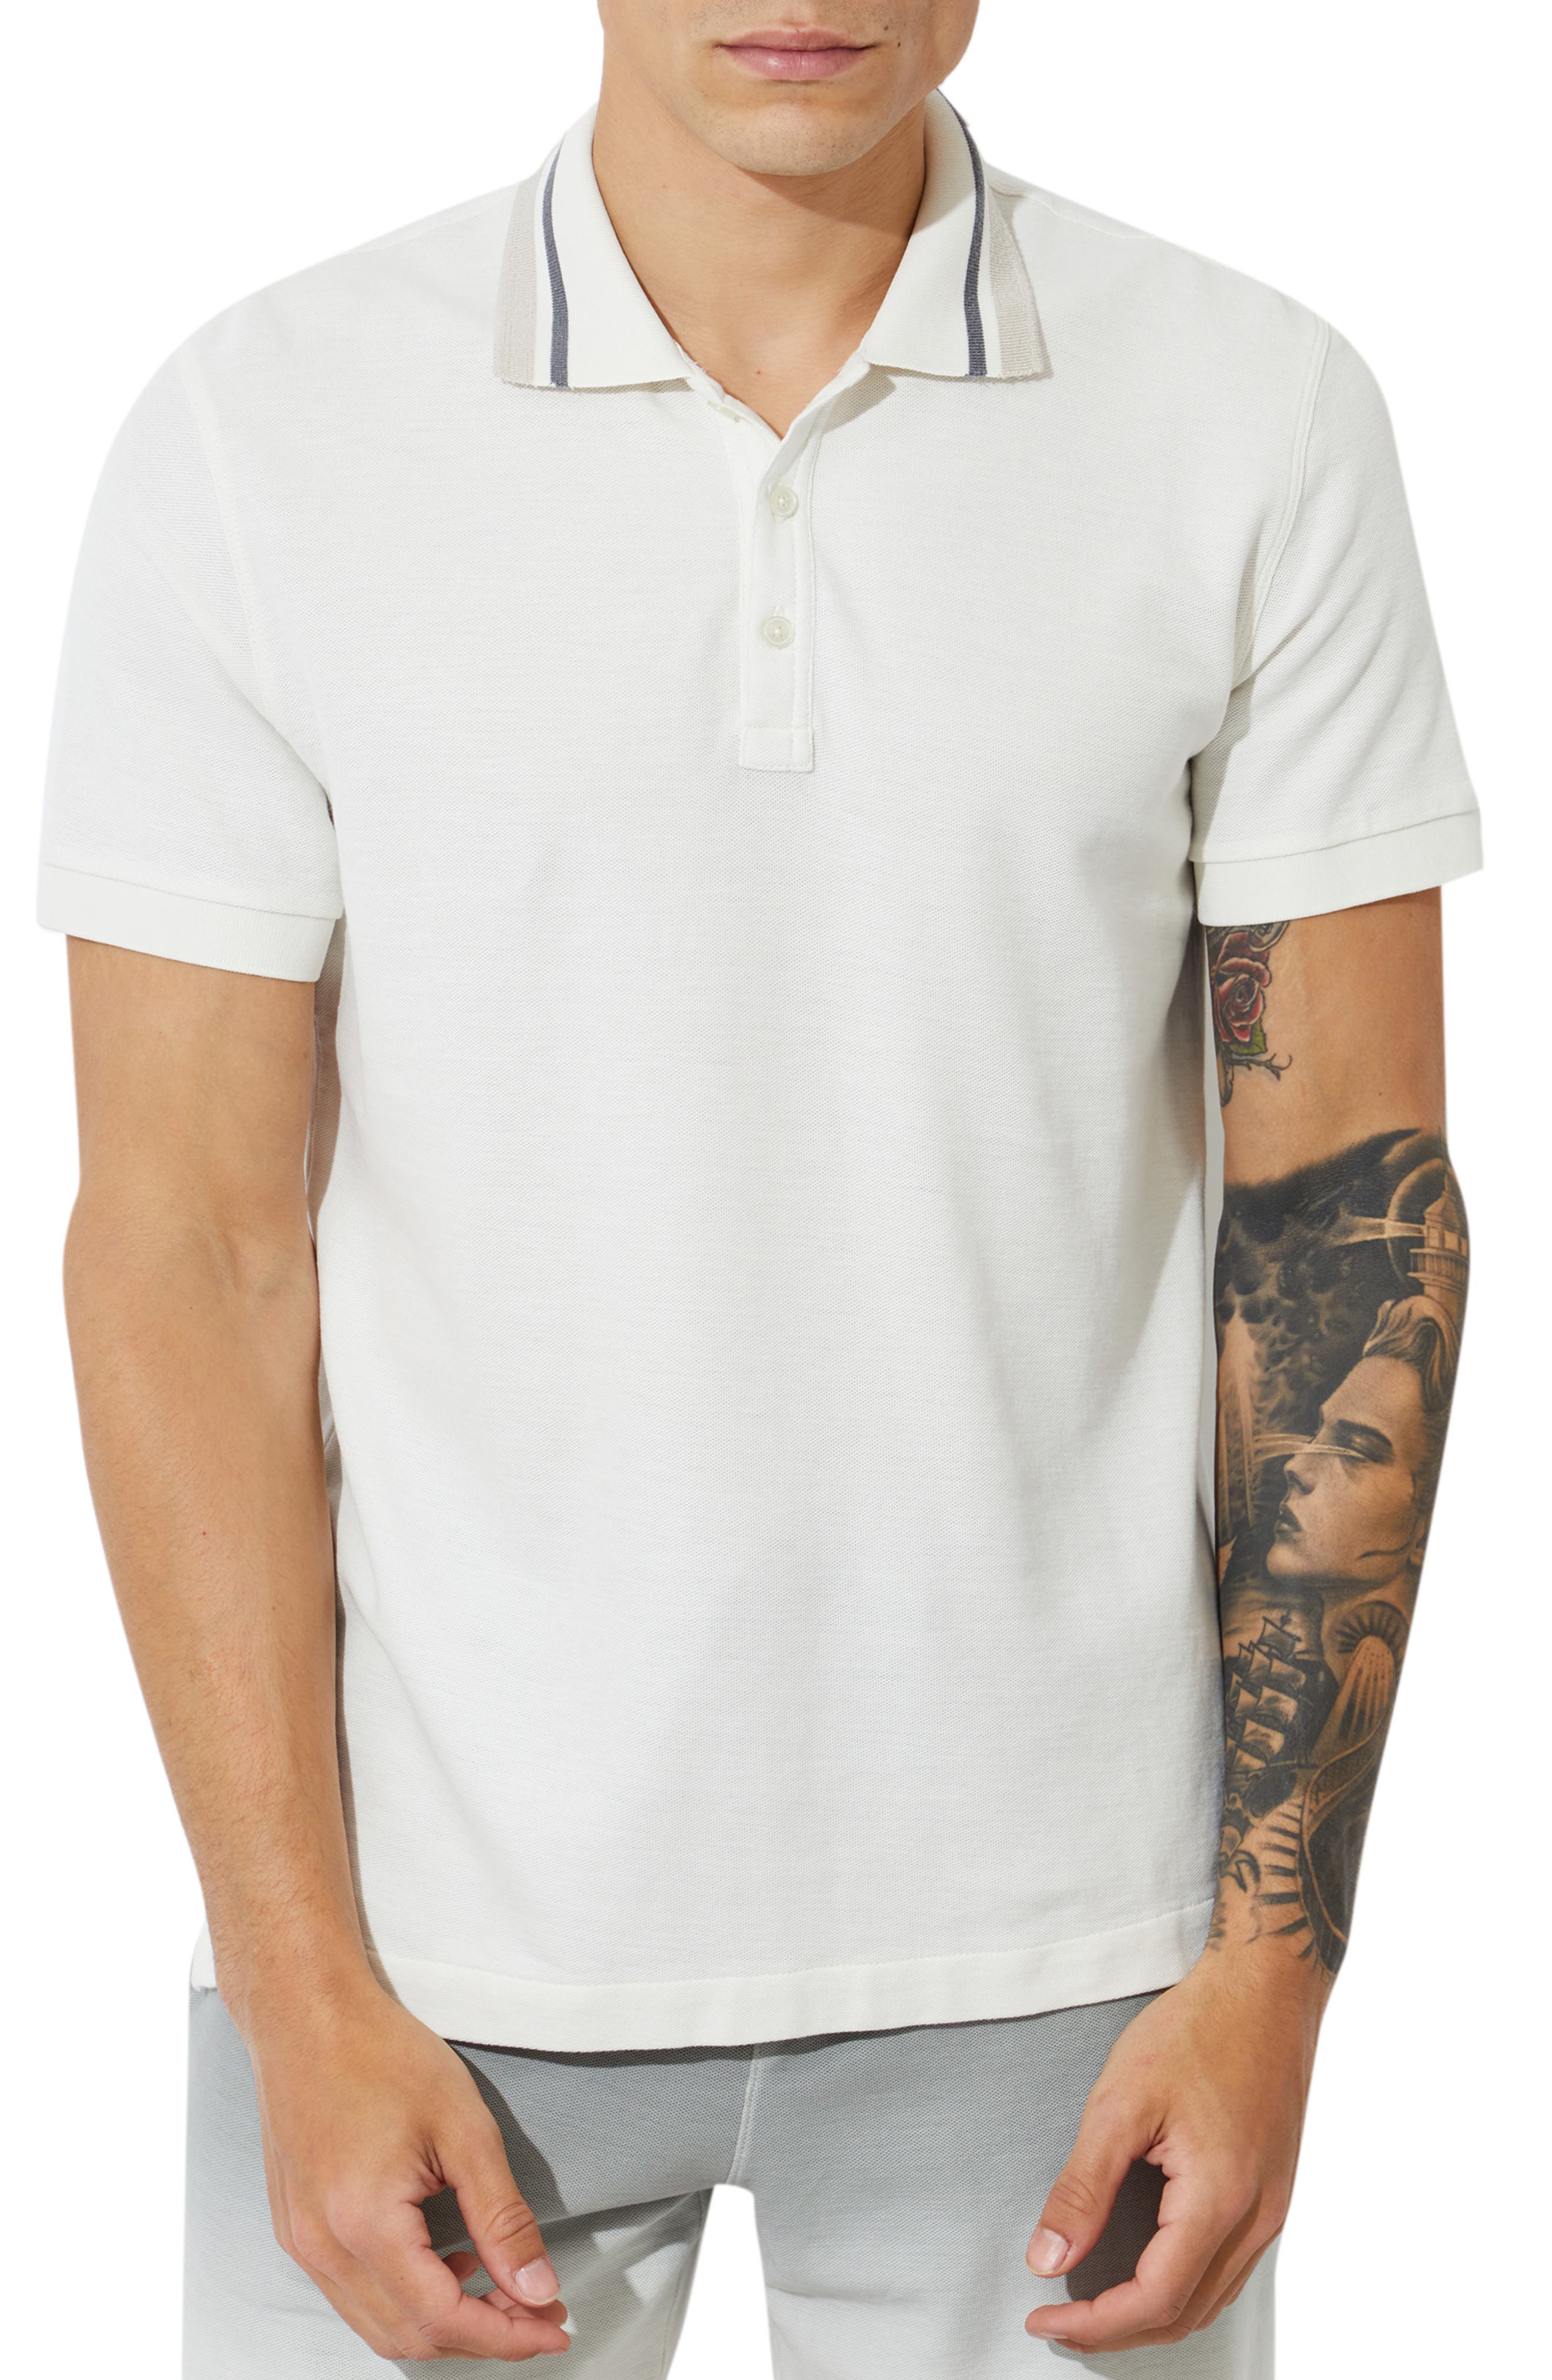 mens plain white polo shirt